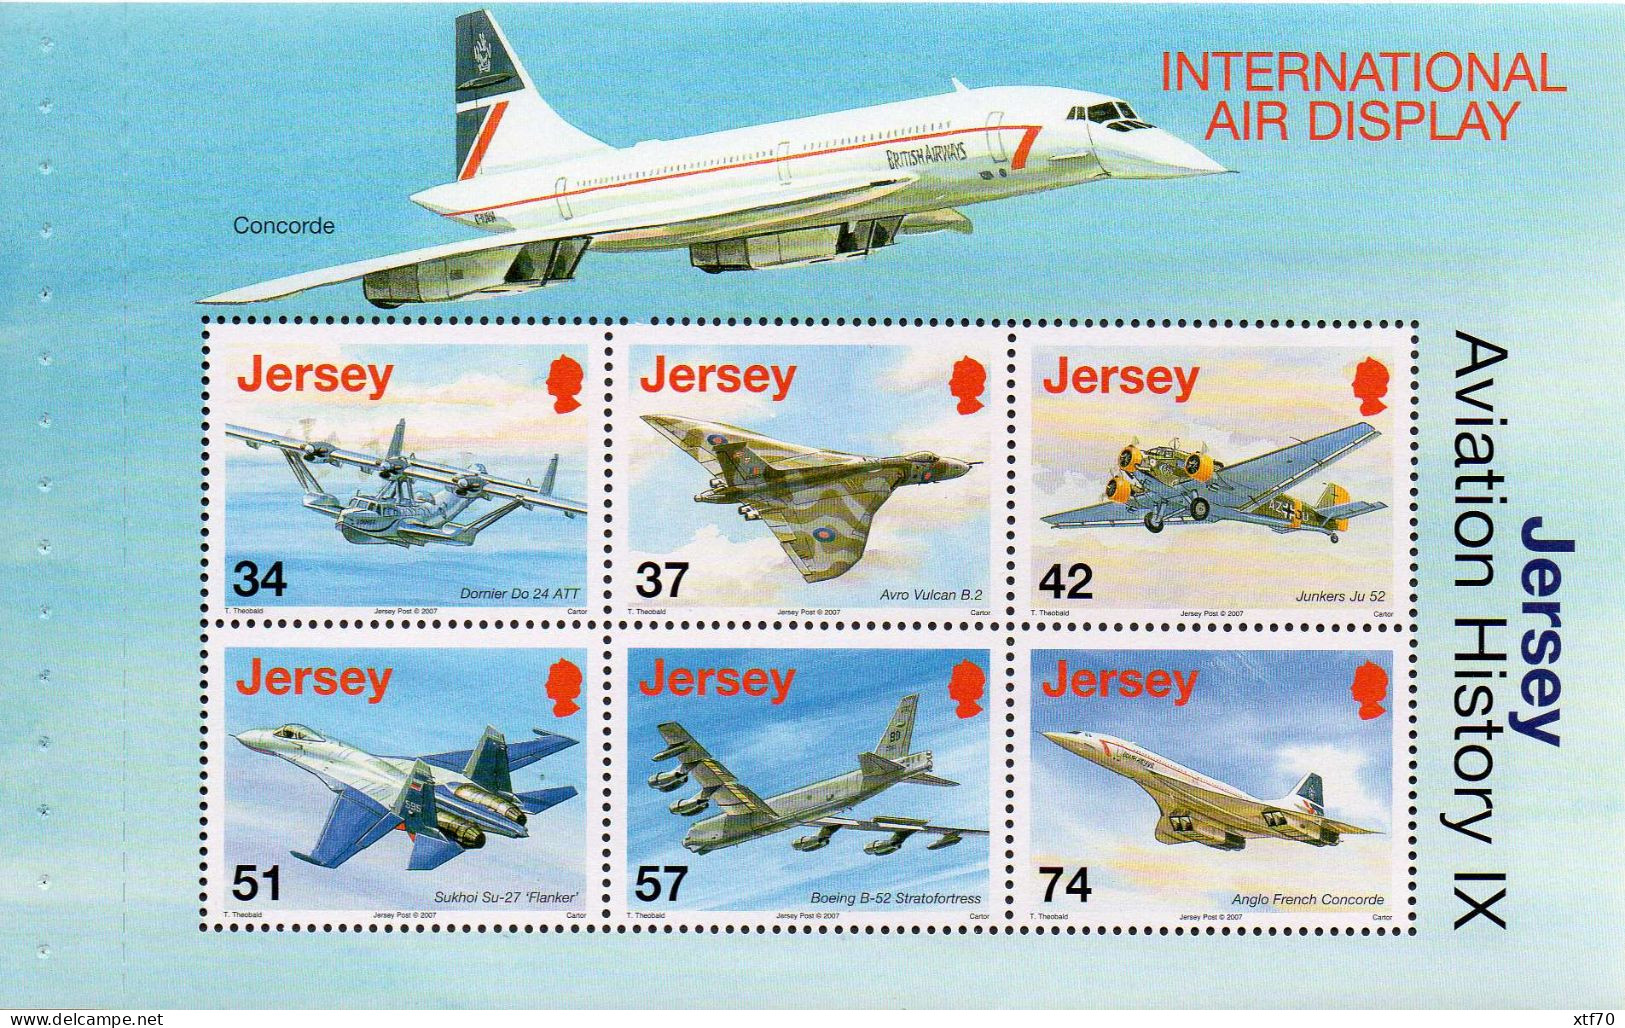 JERSEY 2007 Jersey International Air Display Prestige Booklet Pane 1326a - Jersey